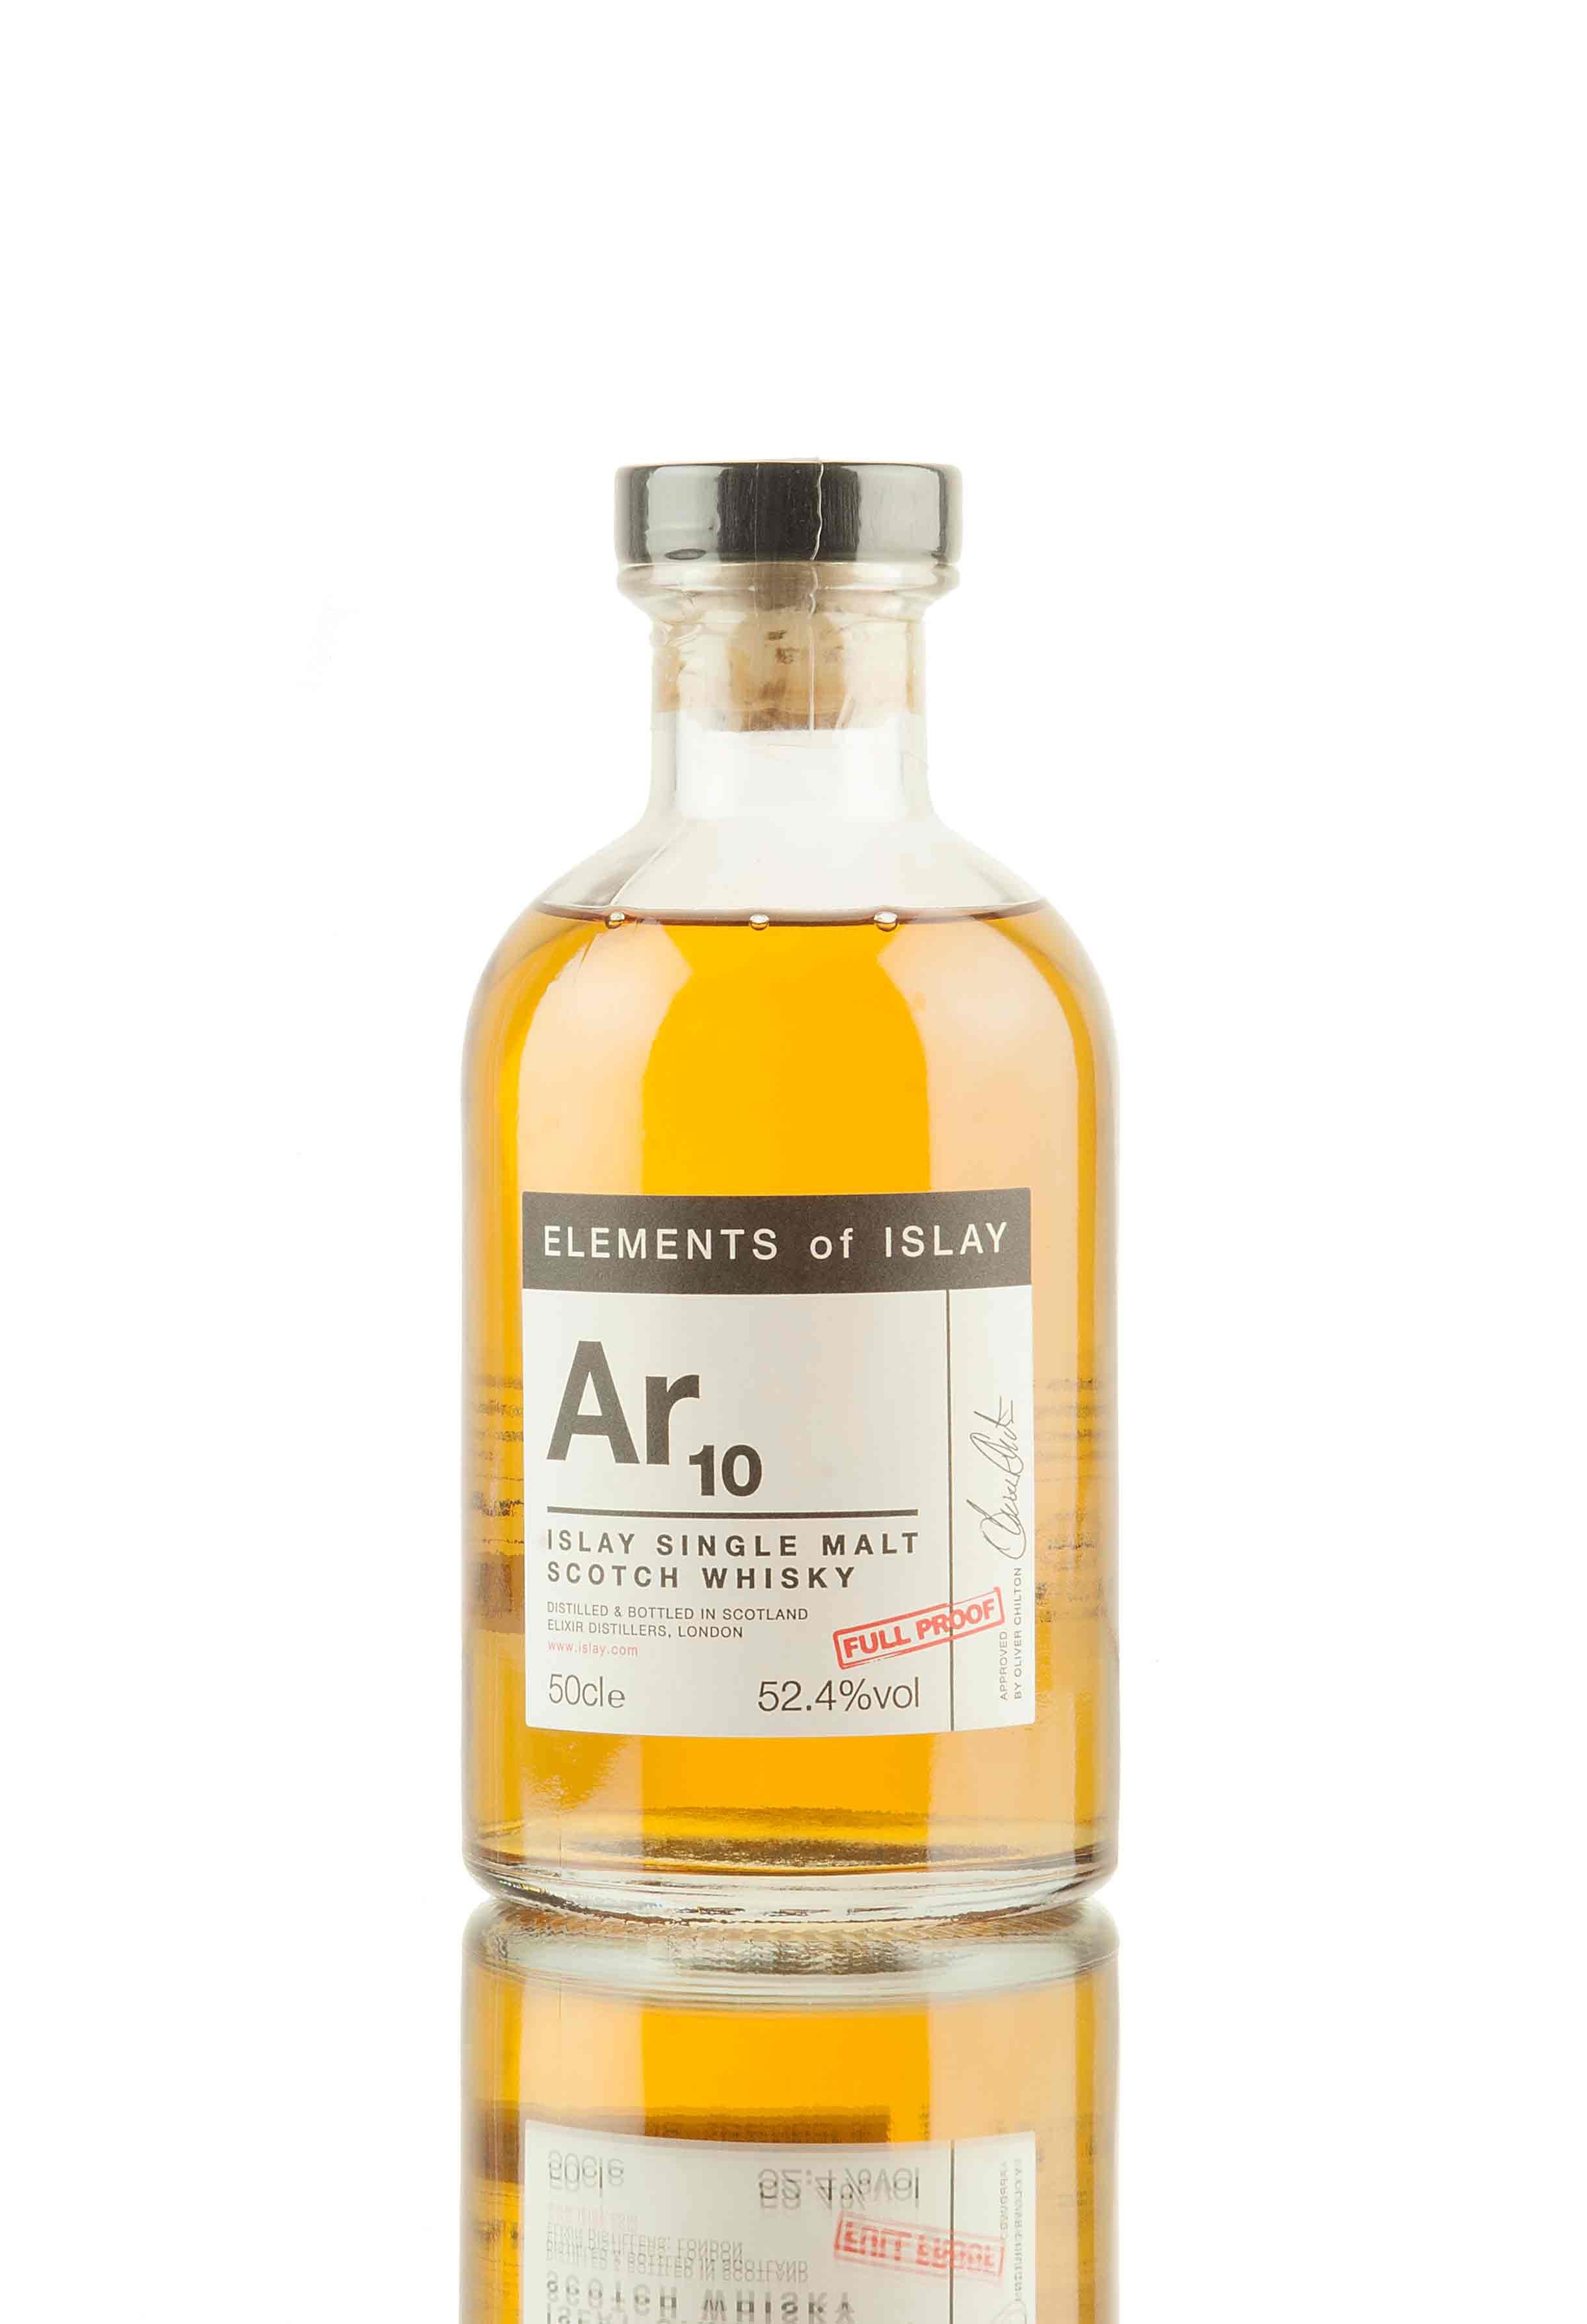 Ar10 - Elements of Islay (Ardbeg)